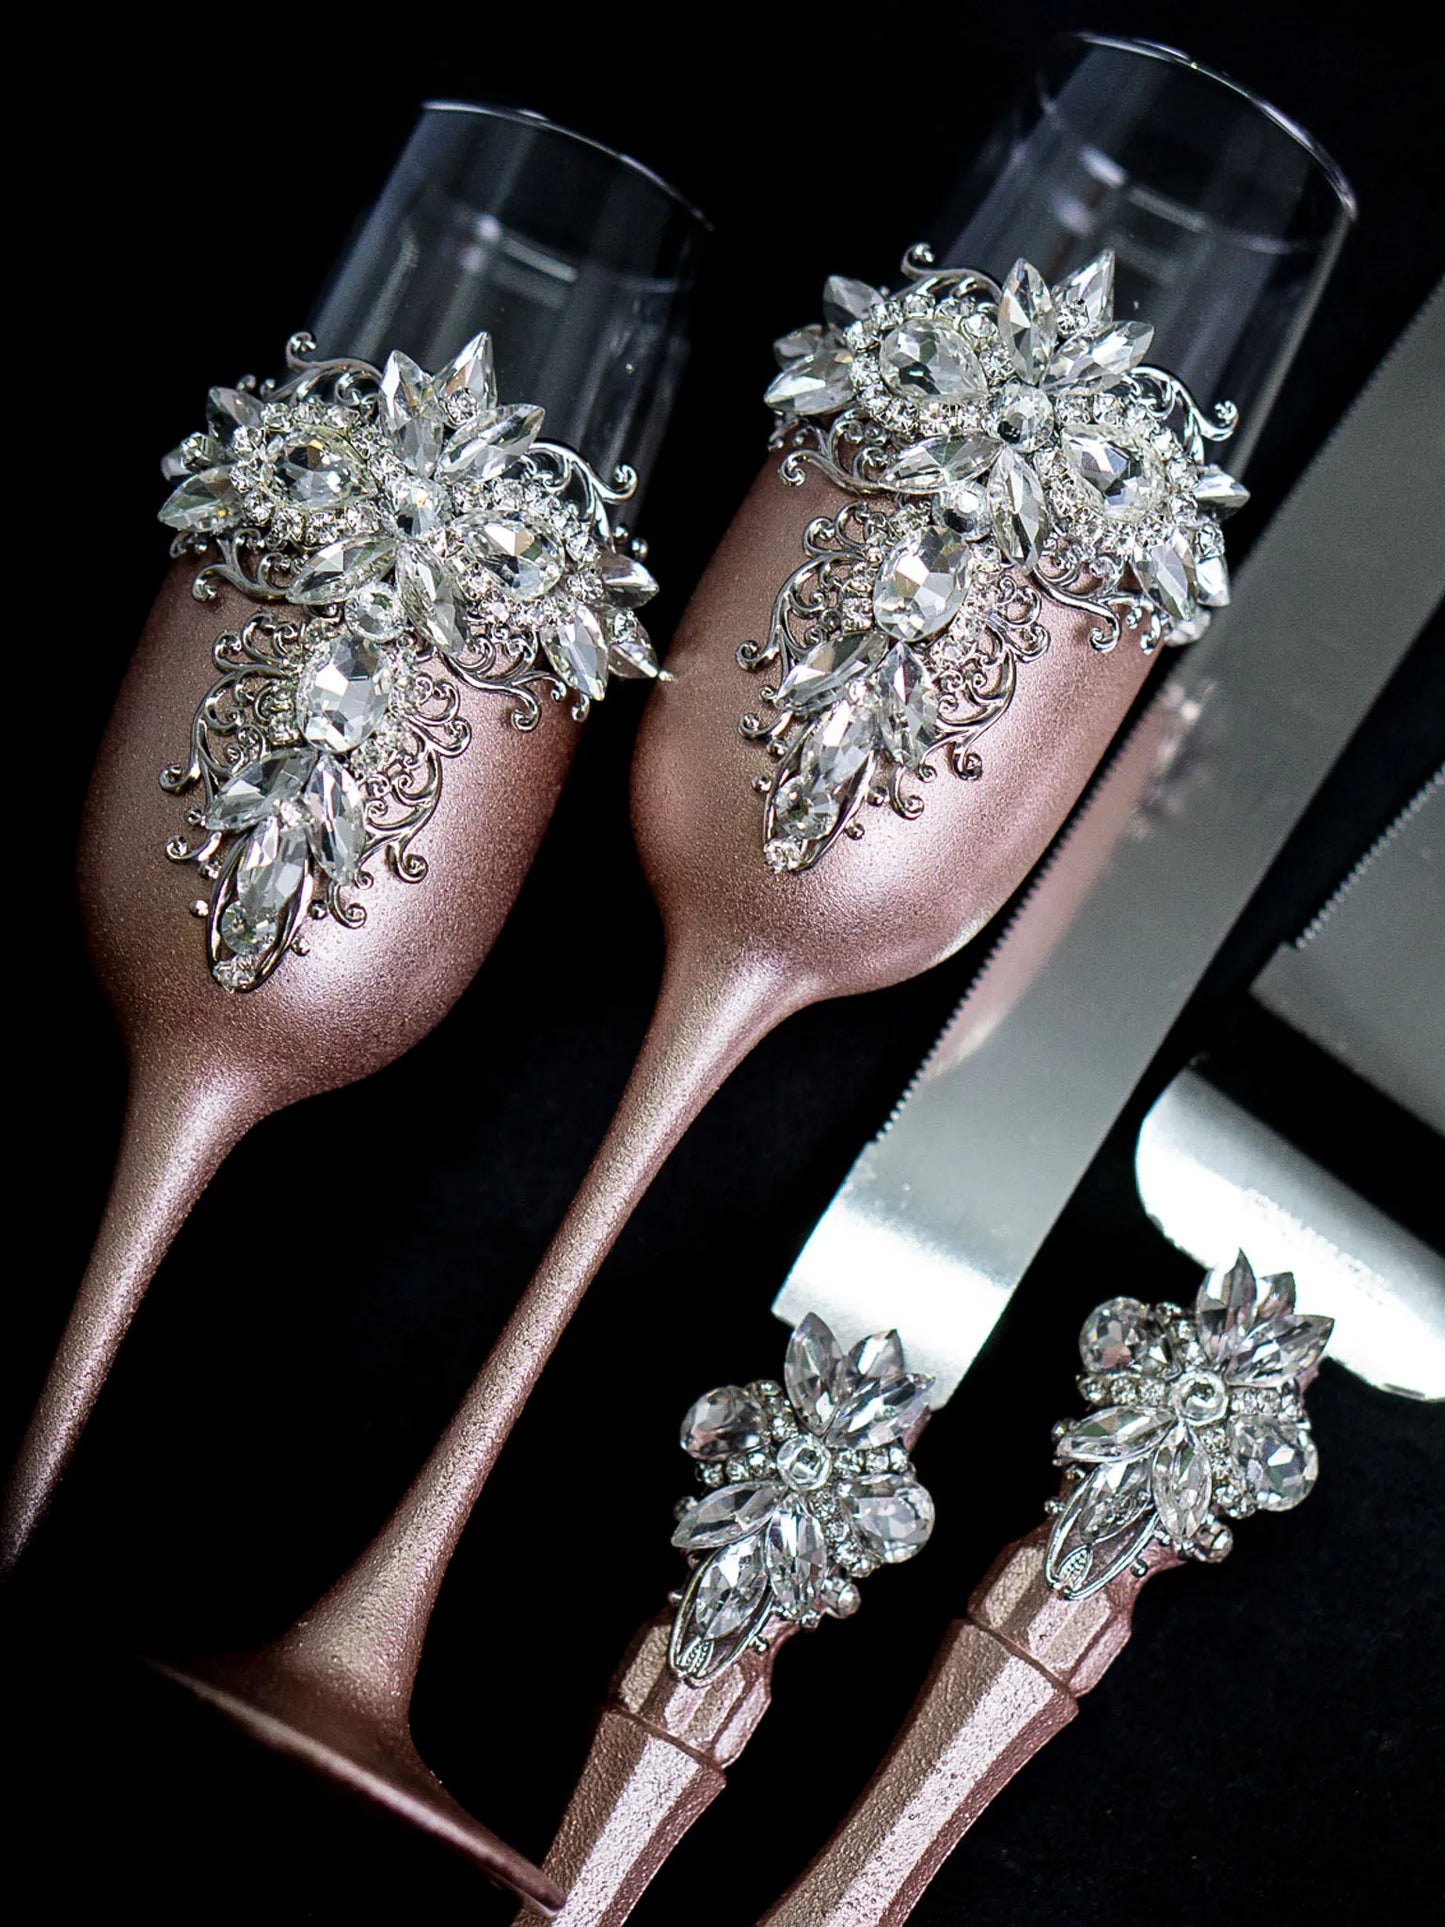 Personalized Elegant Rose Gold Wedding Champagne Flute and Cake Serving Set